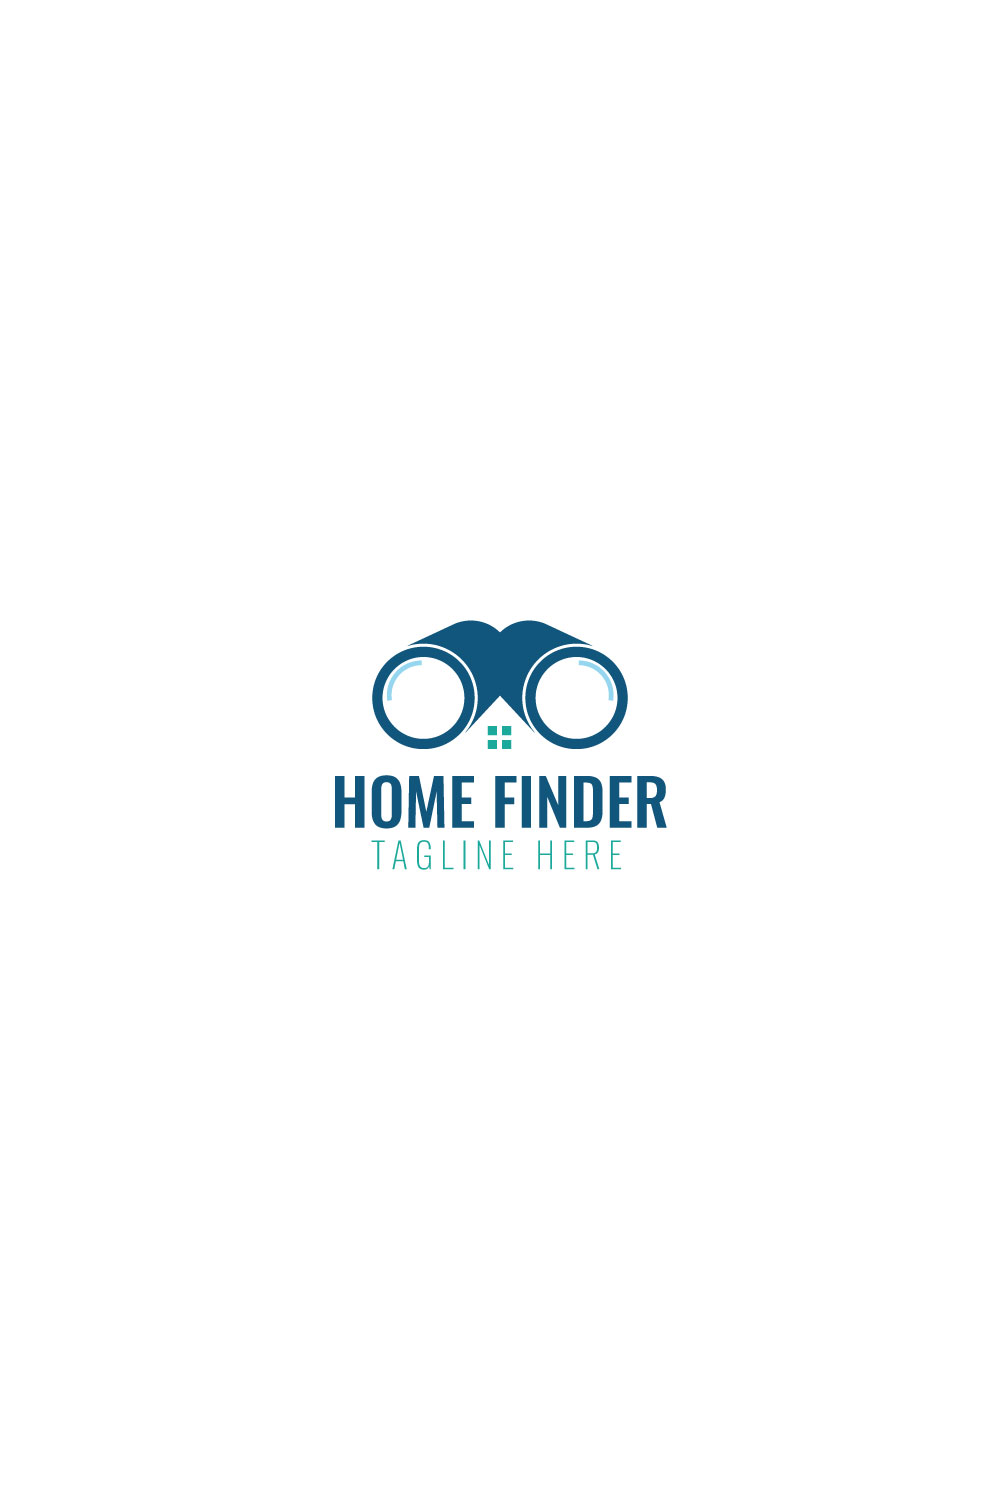 Home Finder Logo pinterest preview image.